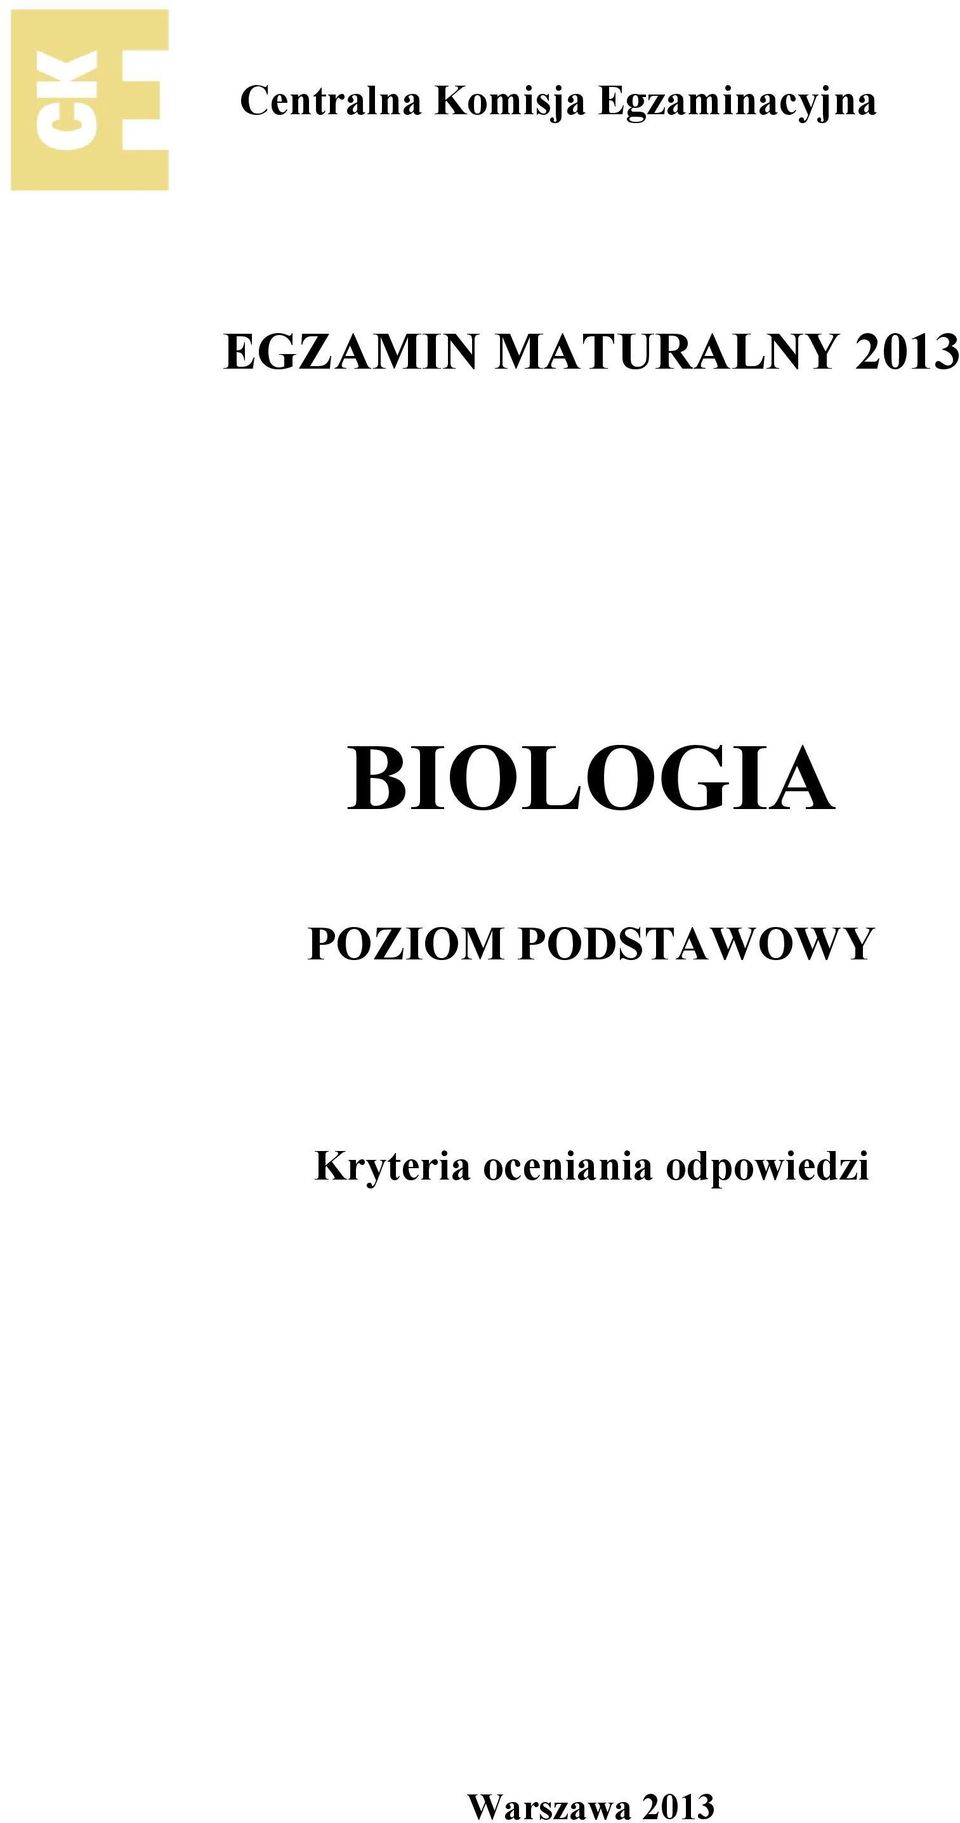 MATURALNY 2013 BIOLOGIA